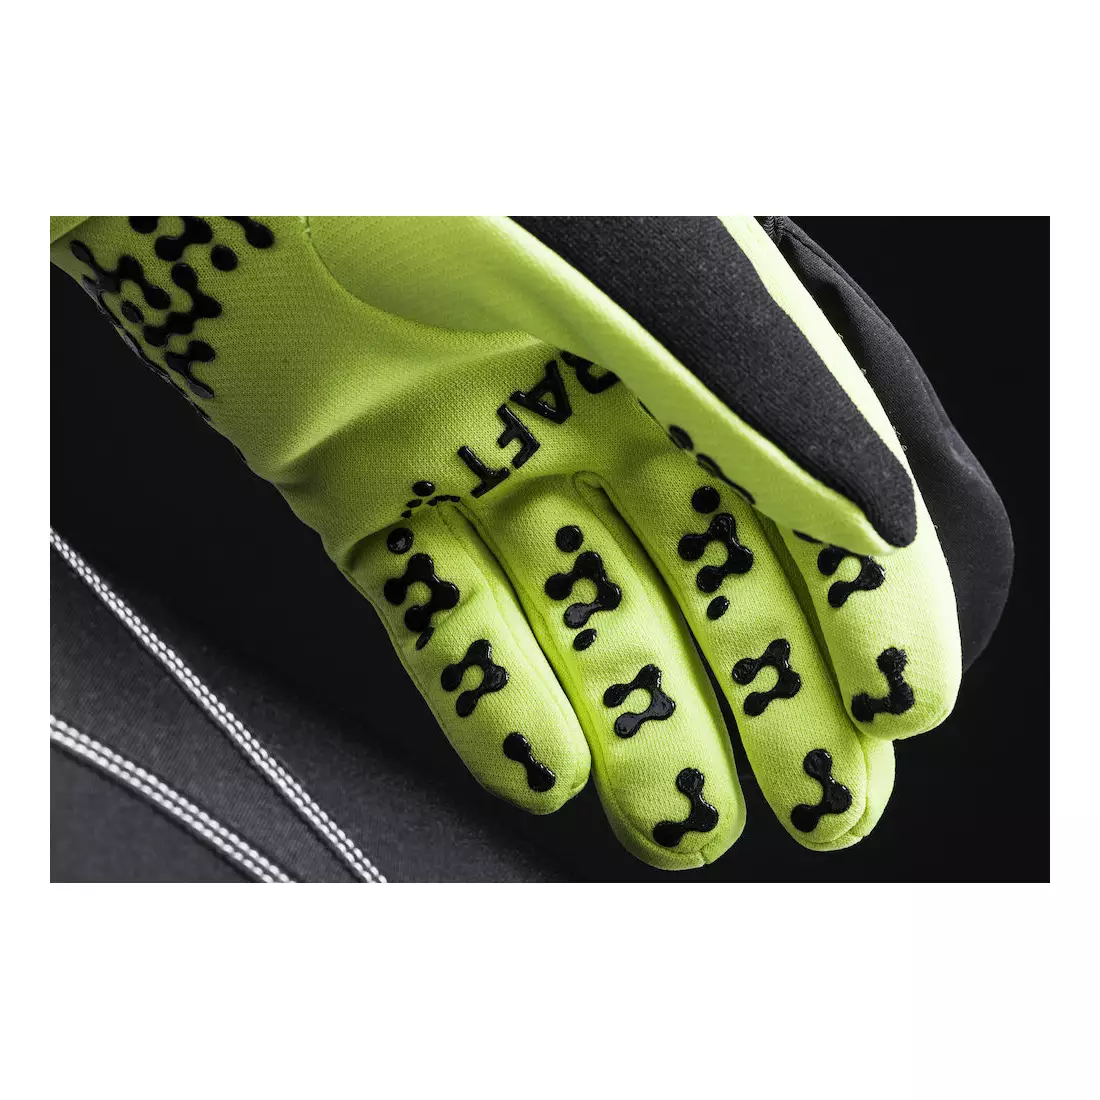 CRAFT KEEP WARM Hybrid-Handschuhe 1903014-2851